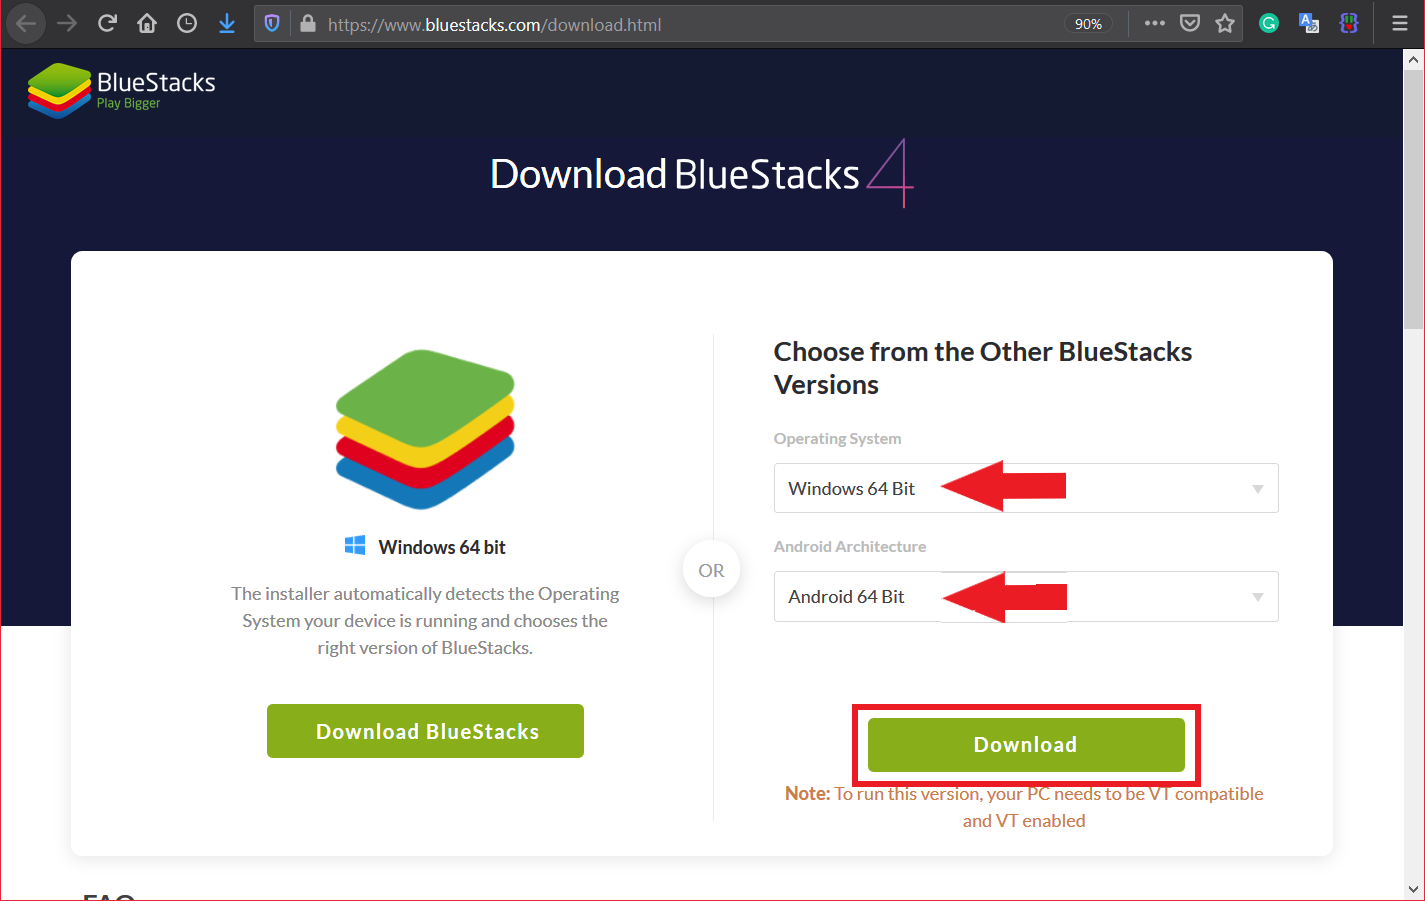 bluestacks download 64 bit windows 10